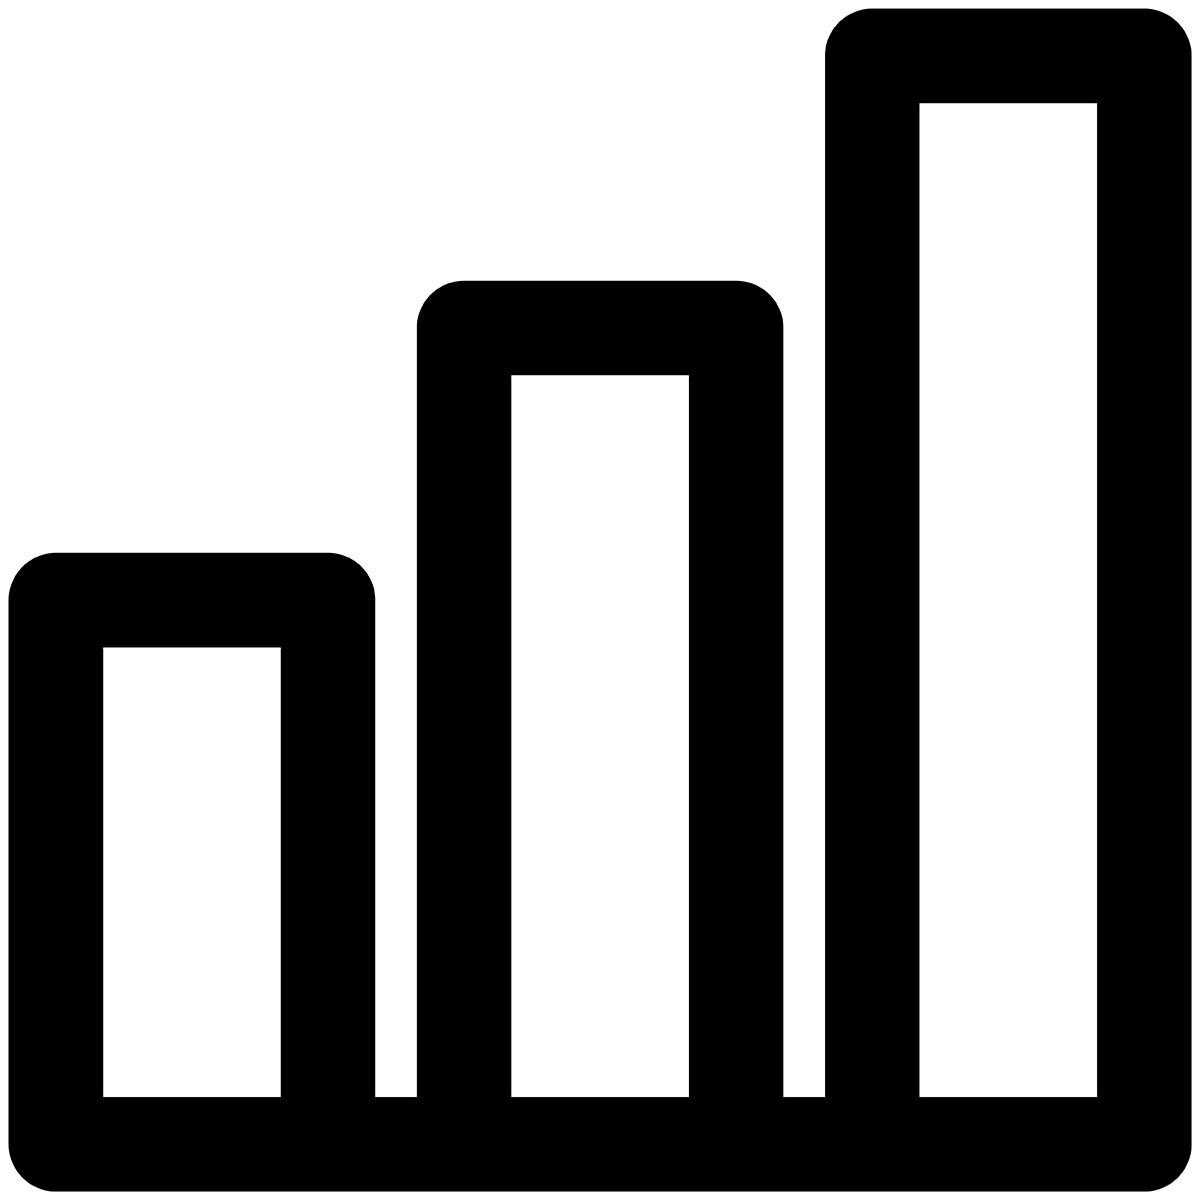 icon of a bar graph